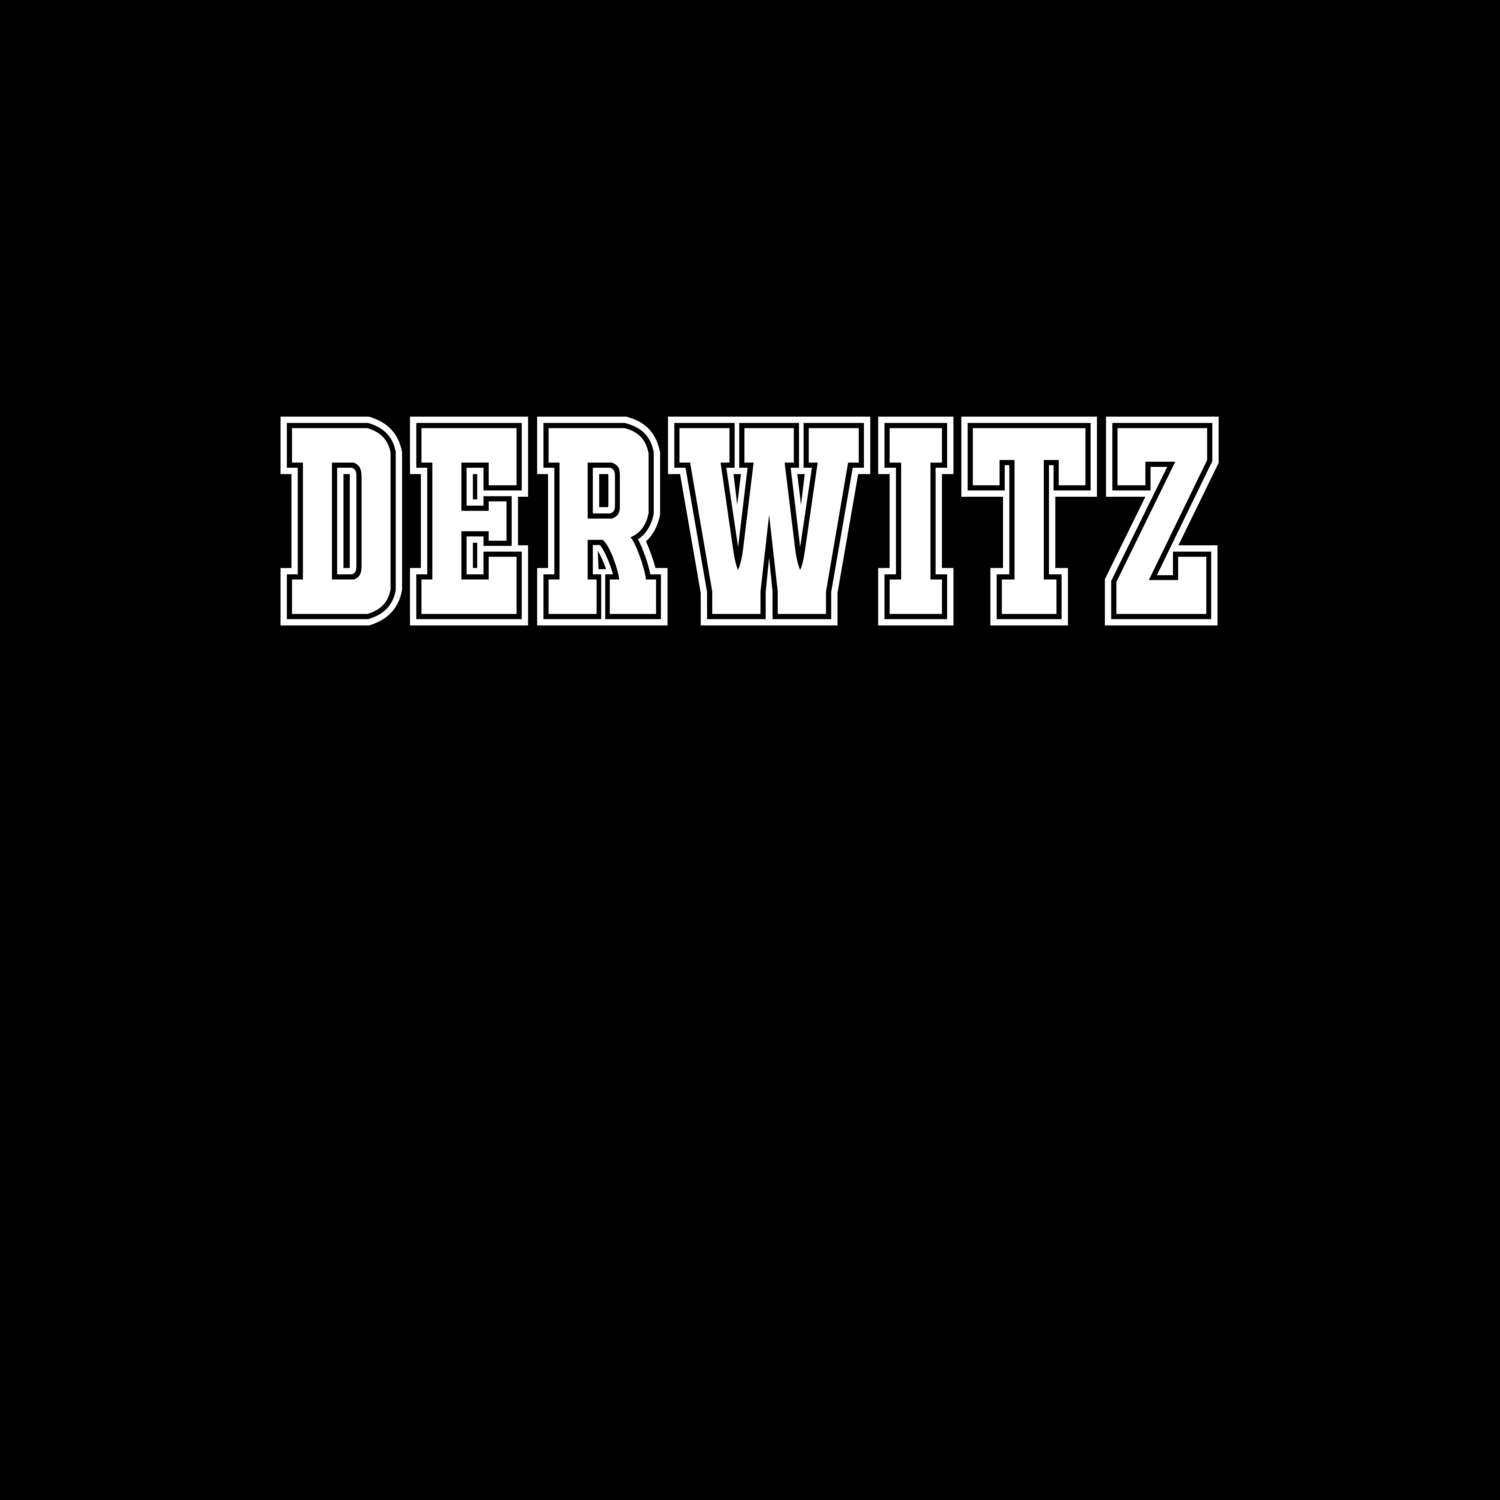 Derwitz T-Shirt »Classic«